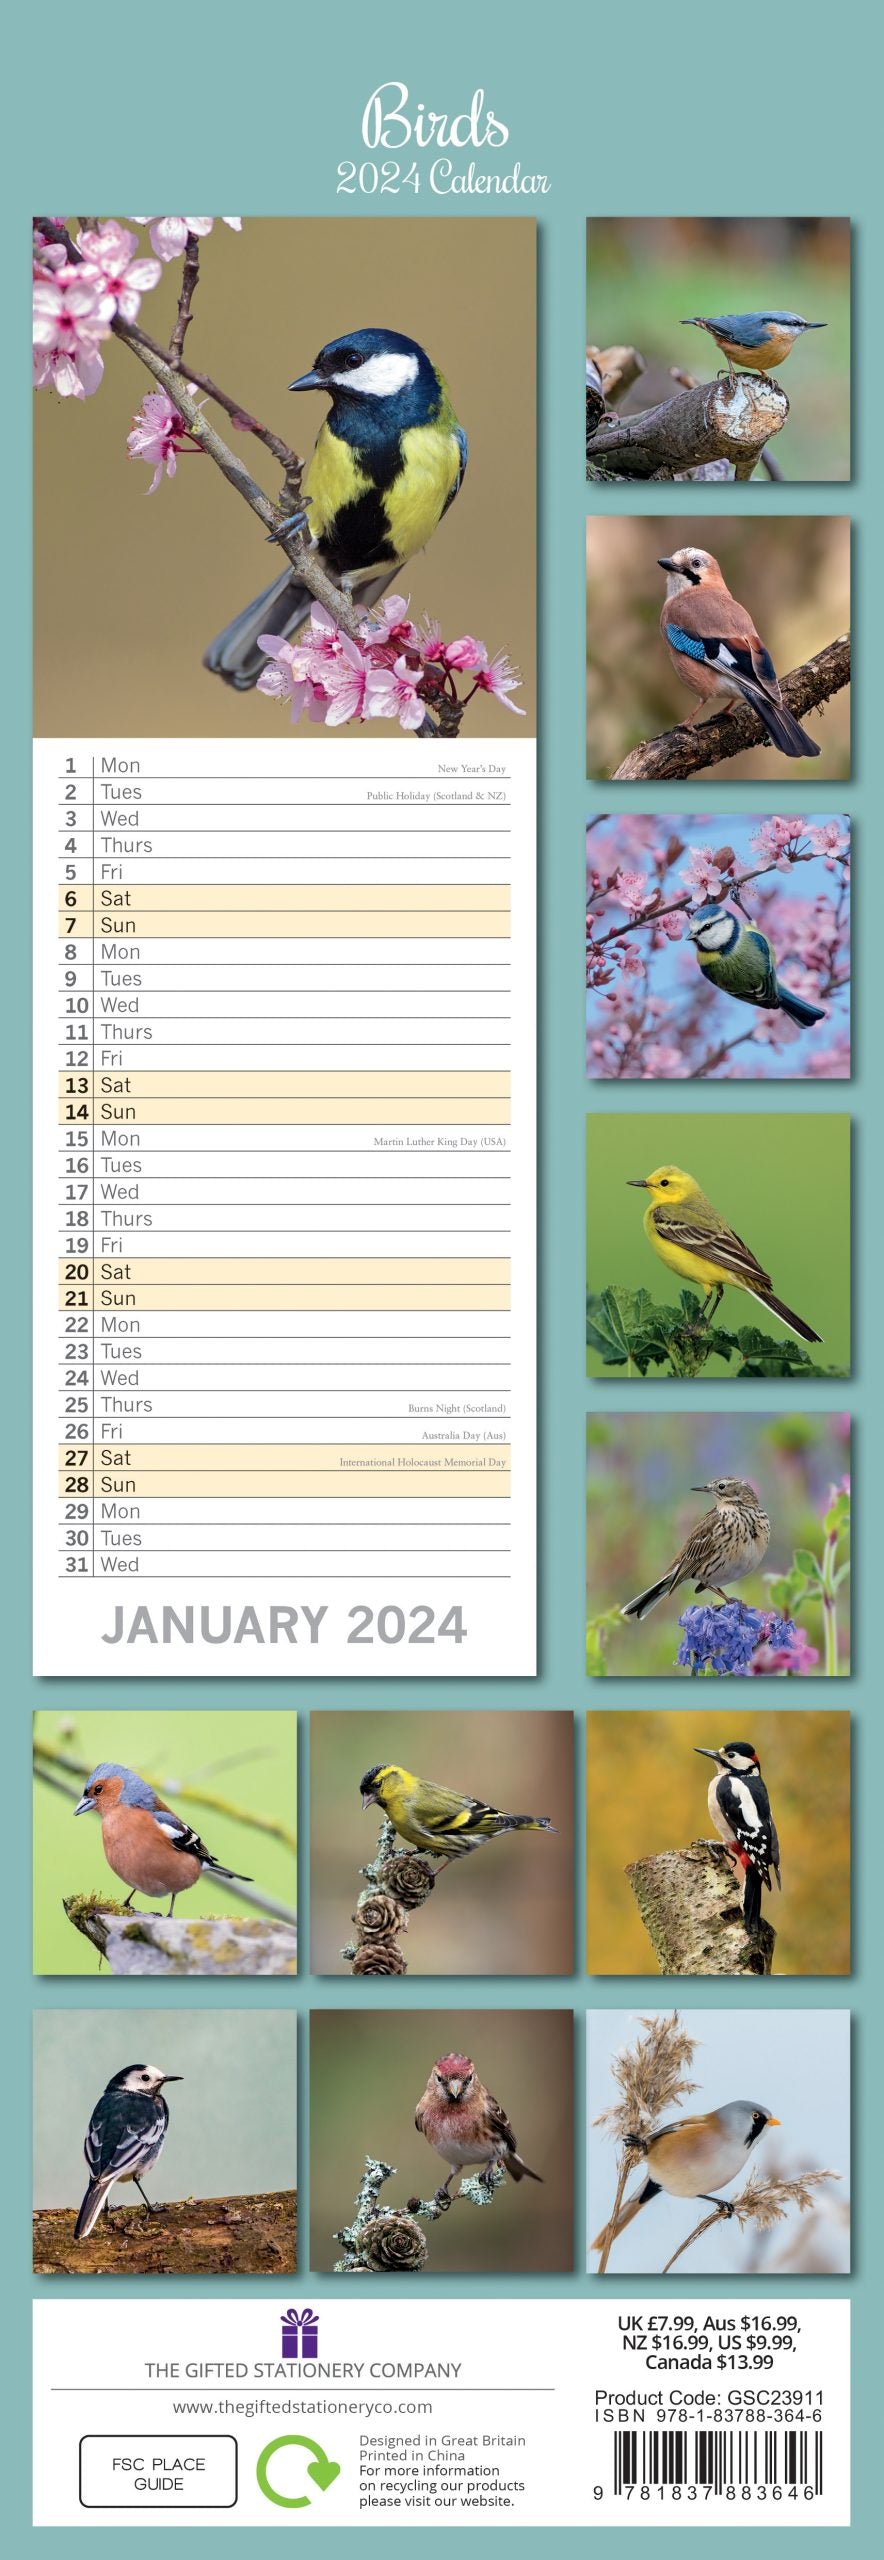 Birds - 2024 Slimline Slim Wall Calendar Hanging Planner New Year Gift